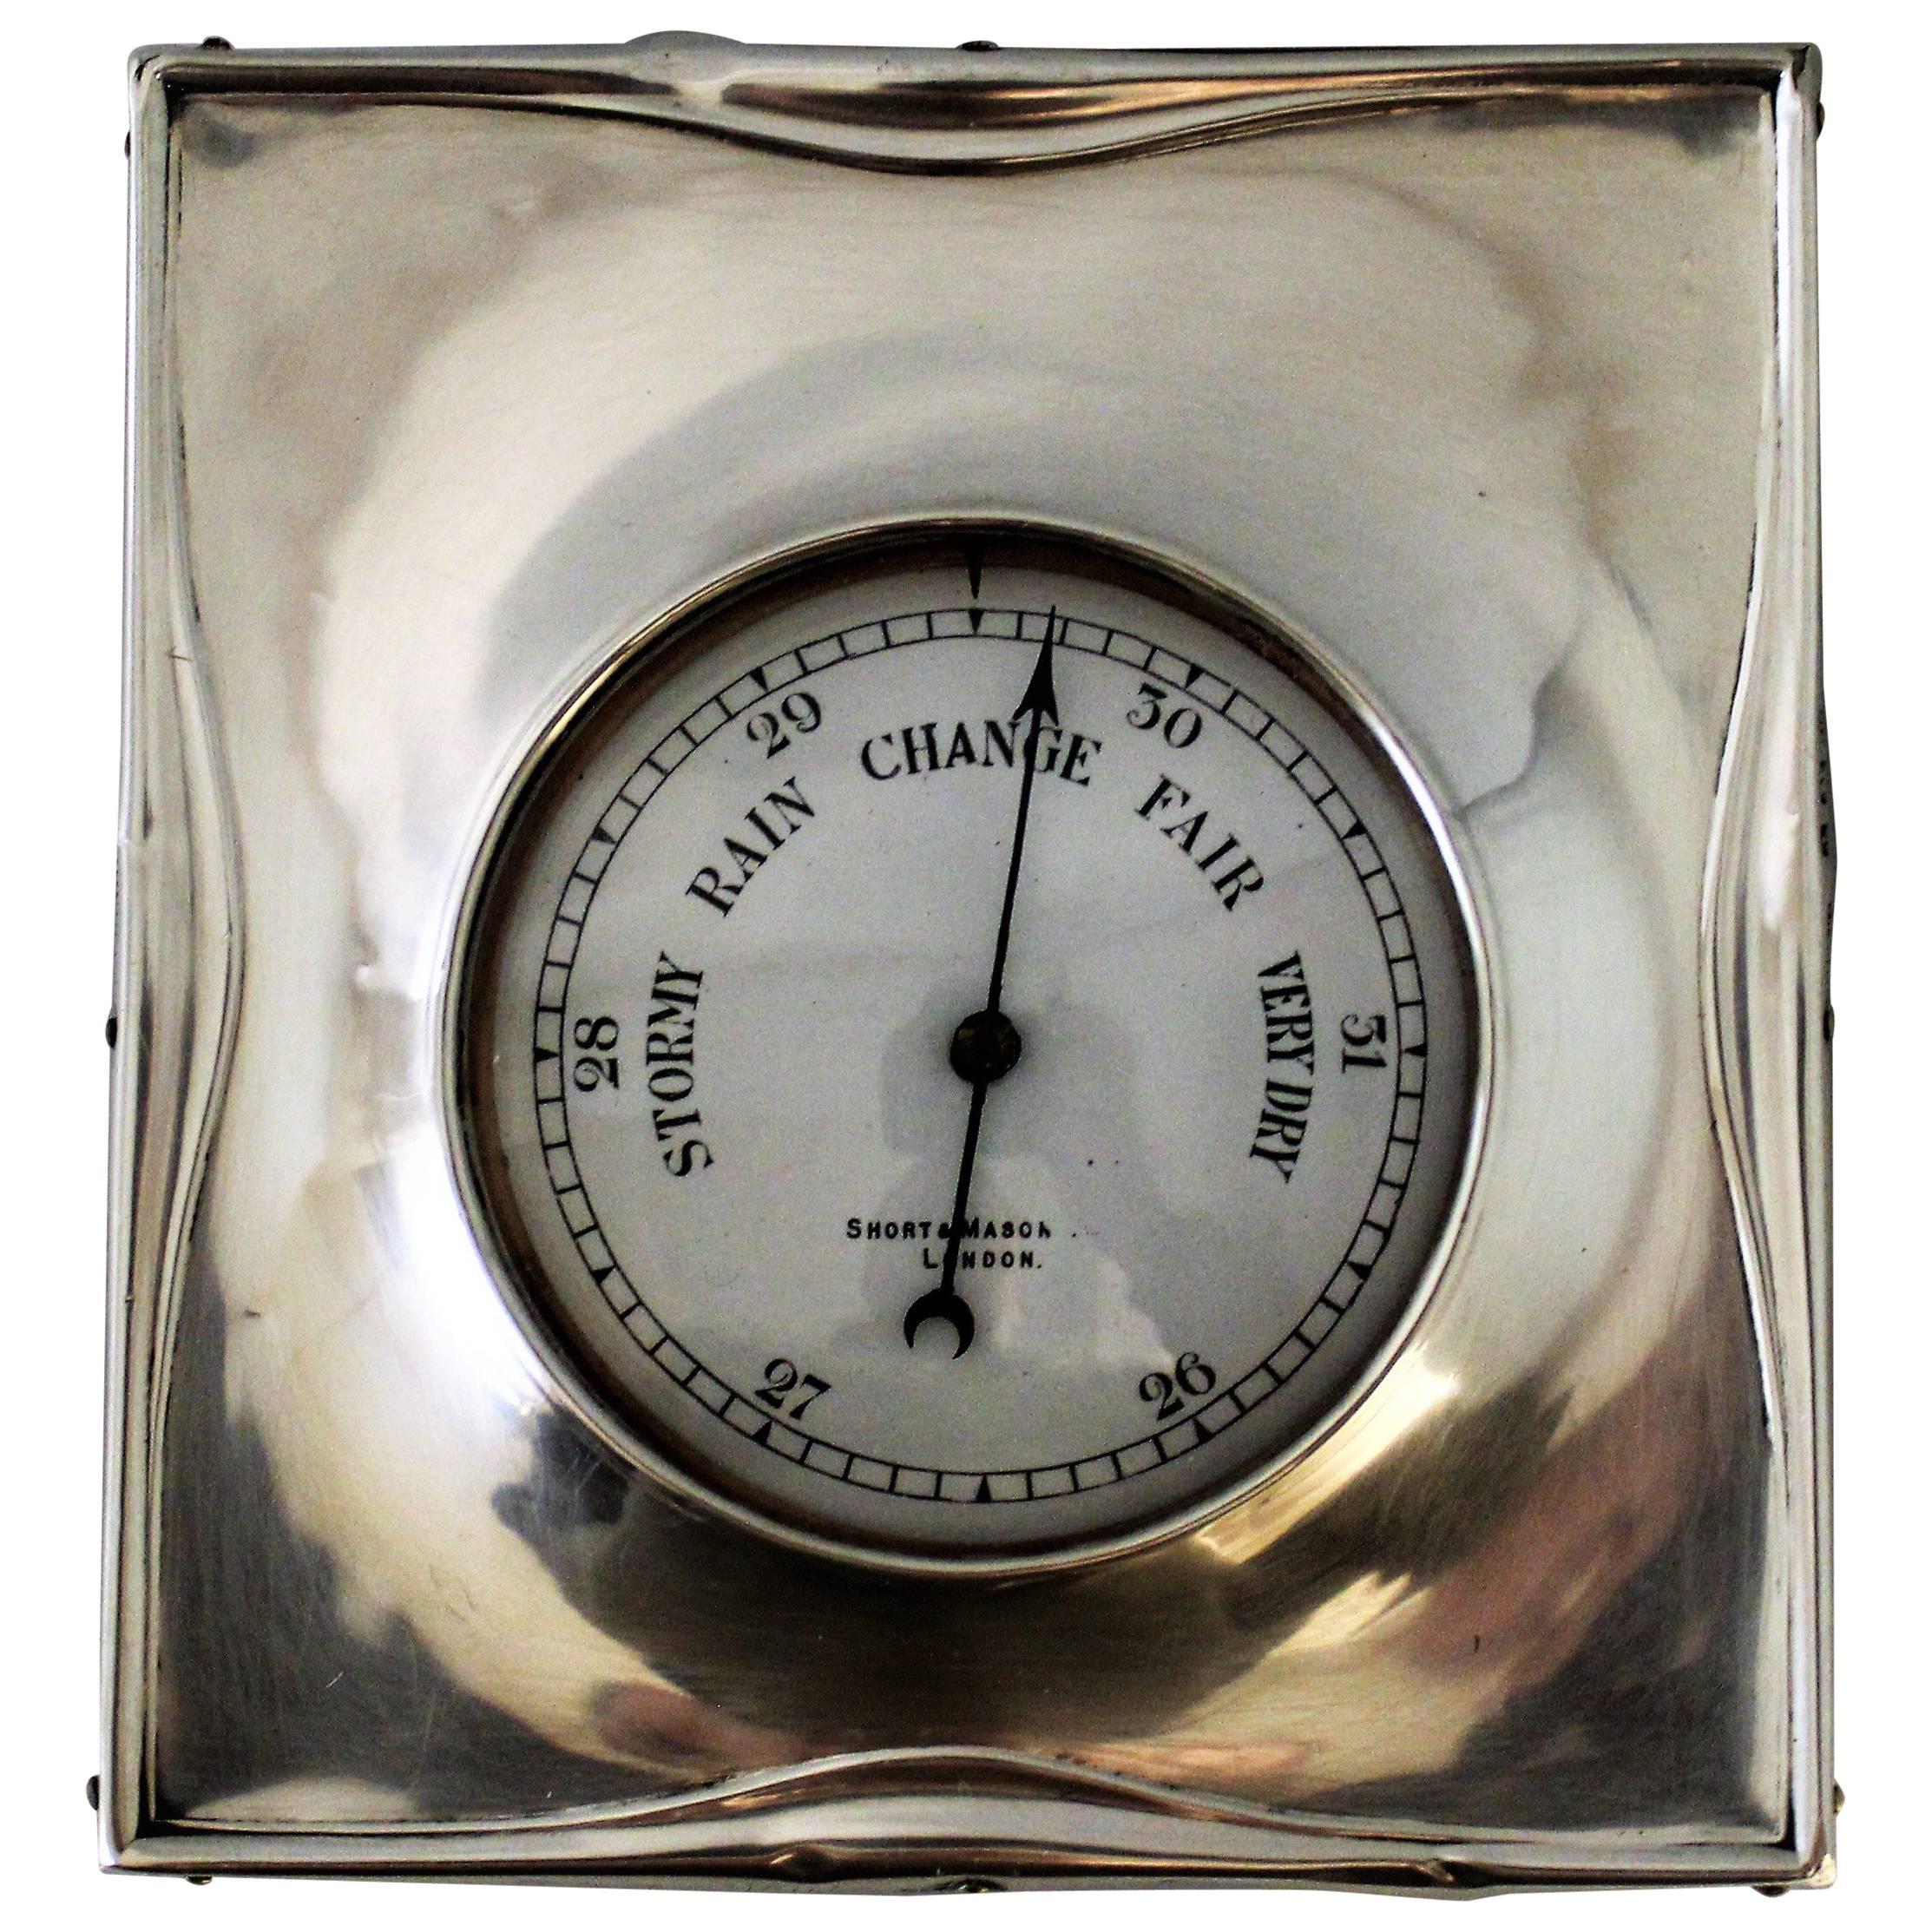 Short & Mason Barometer in Sterling Silver Case